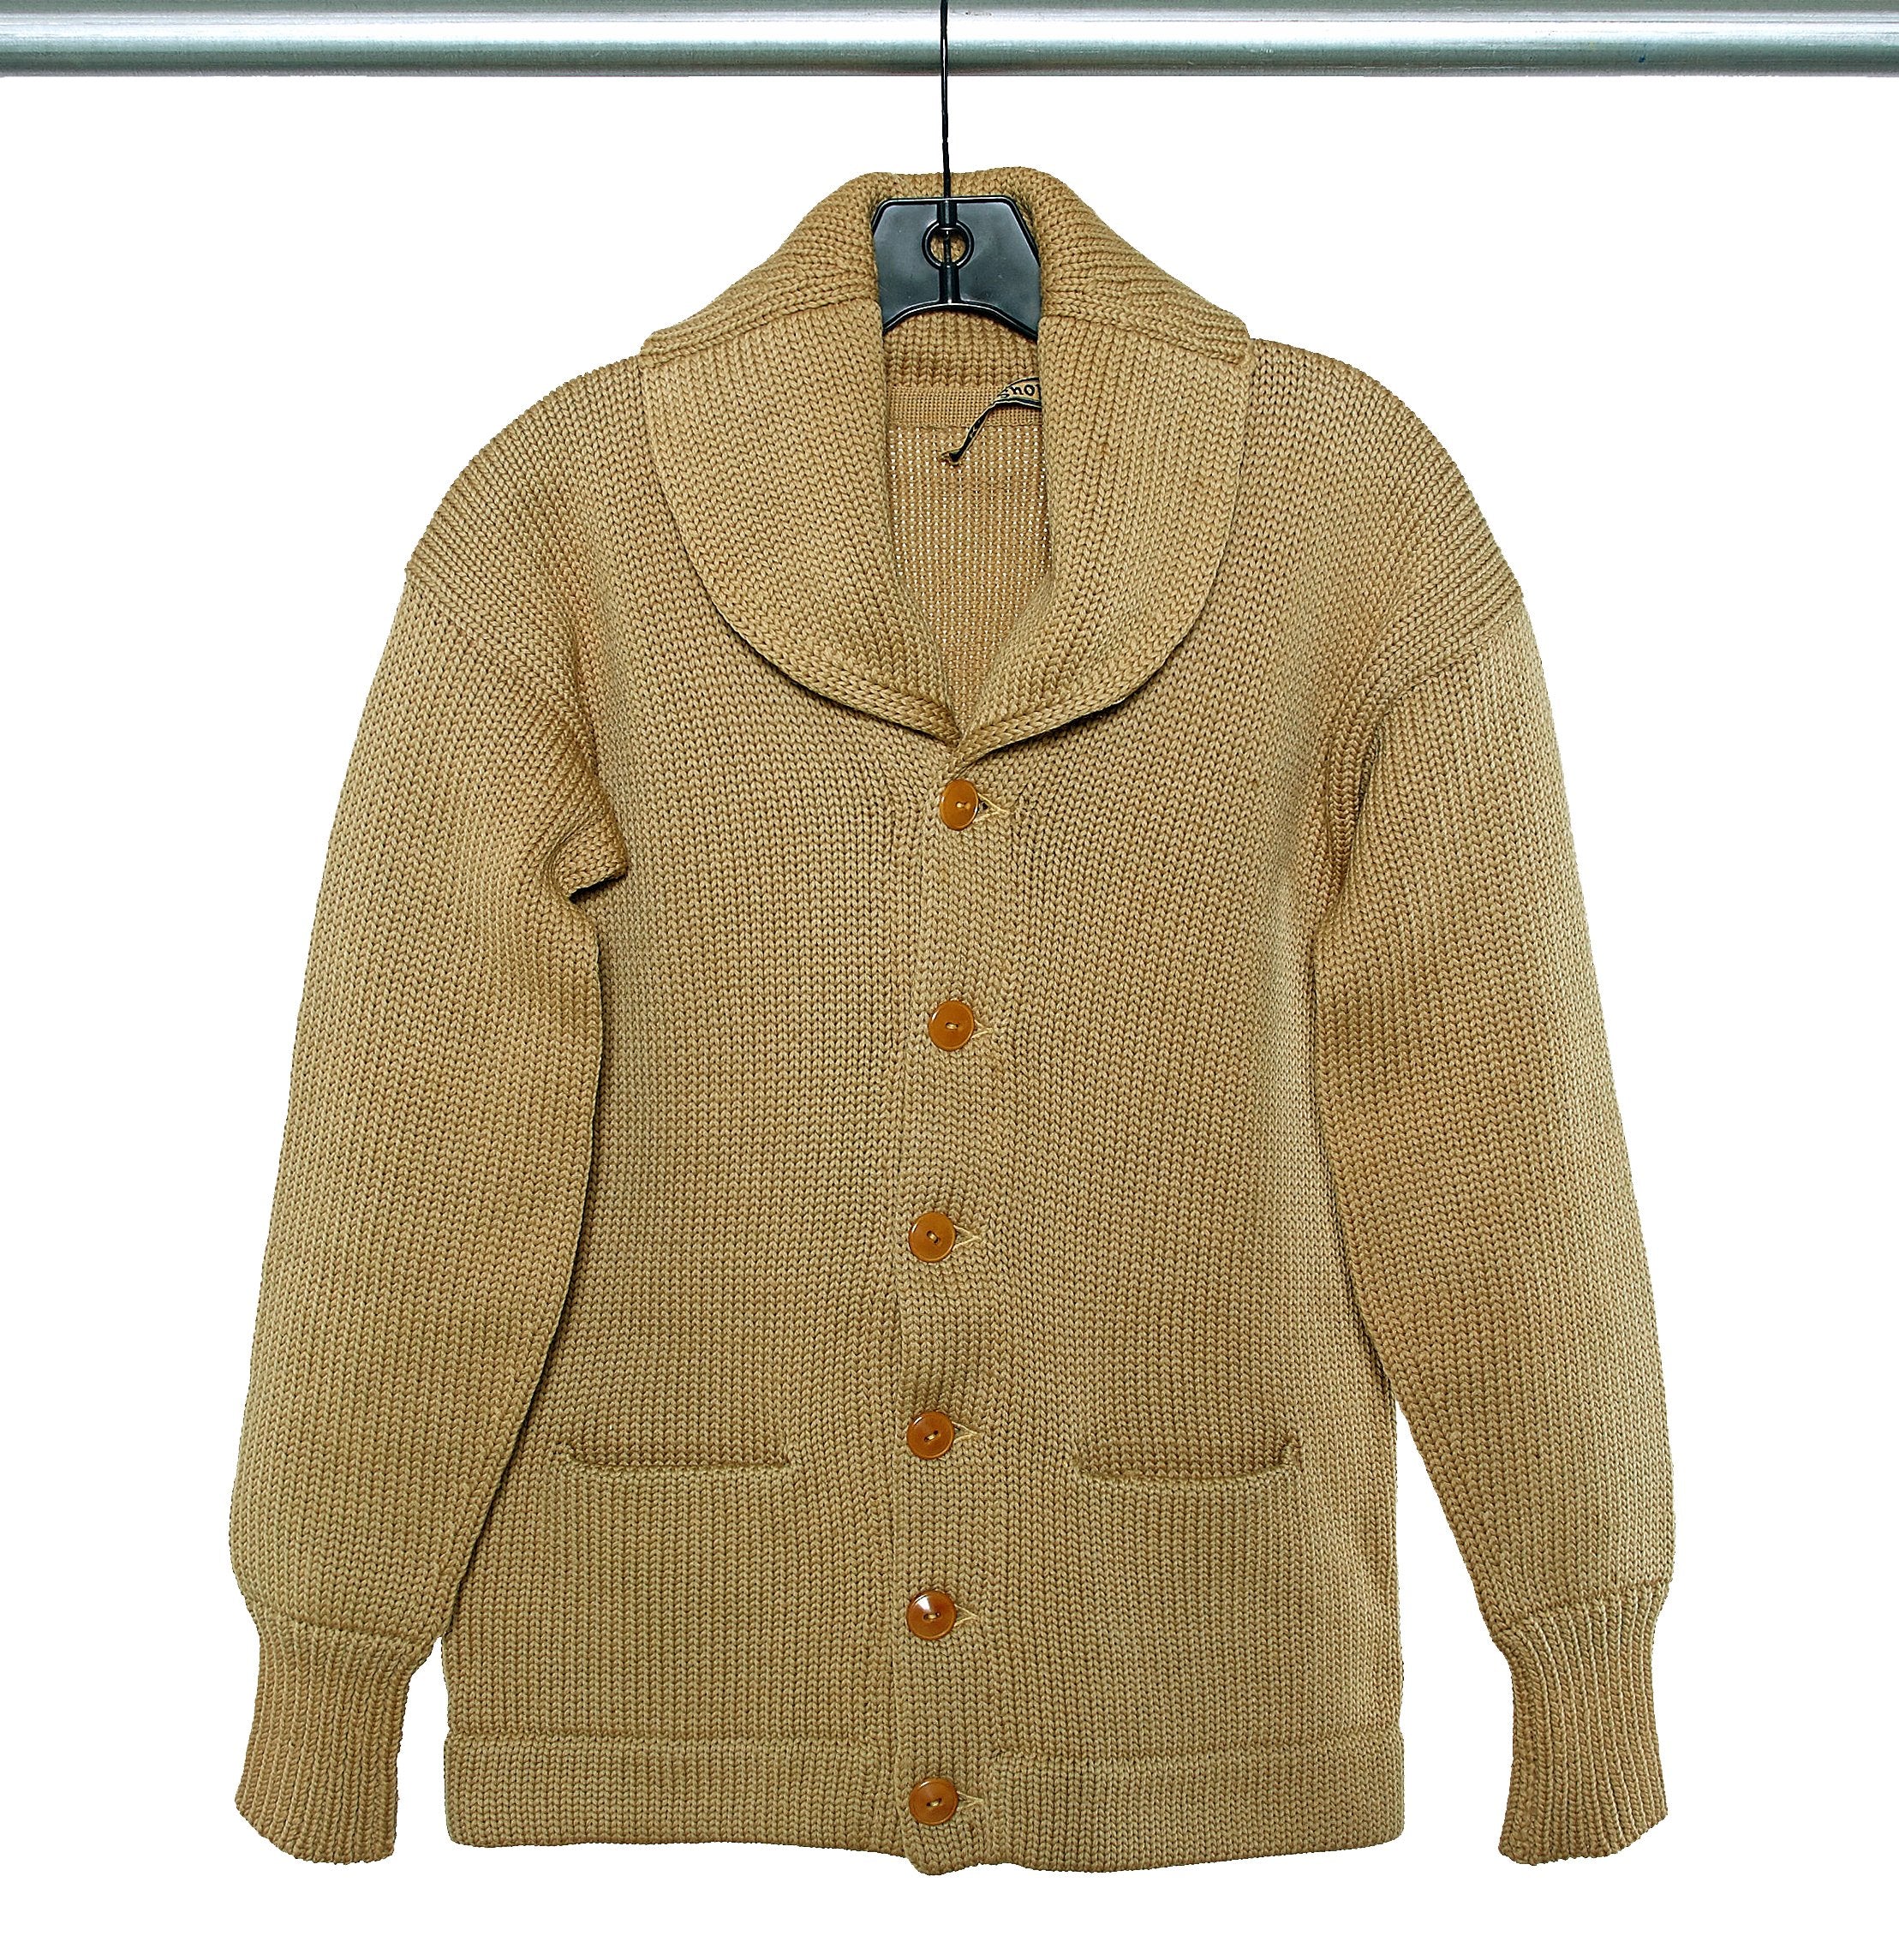 RARE Vintage 1940s NOS Men's Button Varsity Shawl Collar Sweater Cardigan -  VIA VTG VOX POP